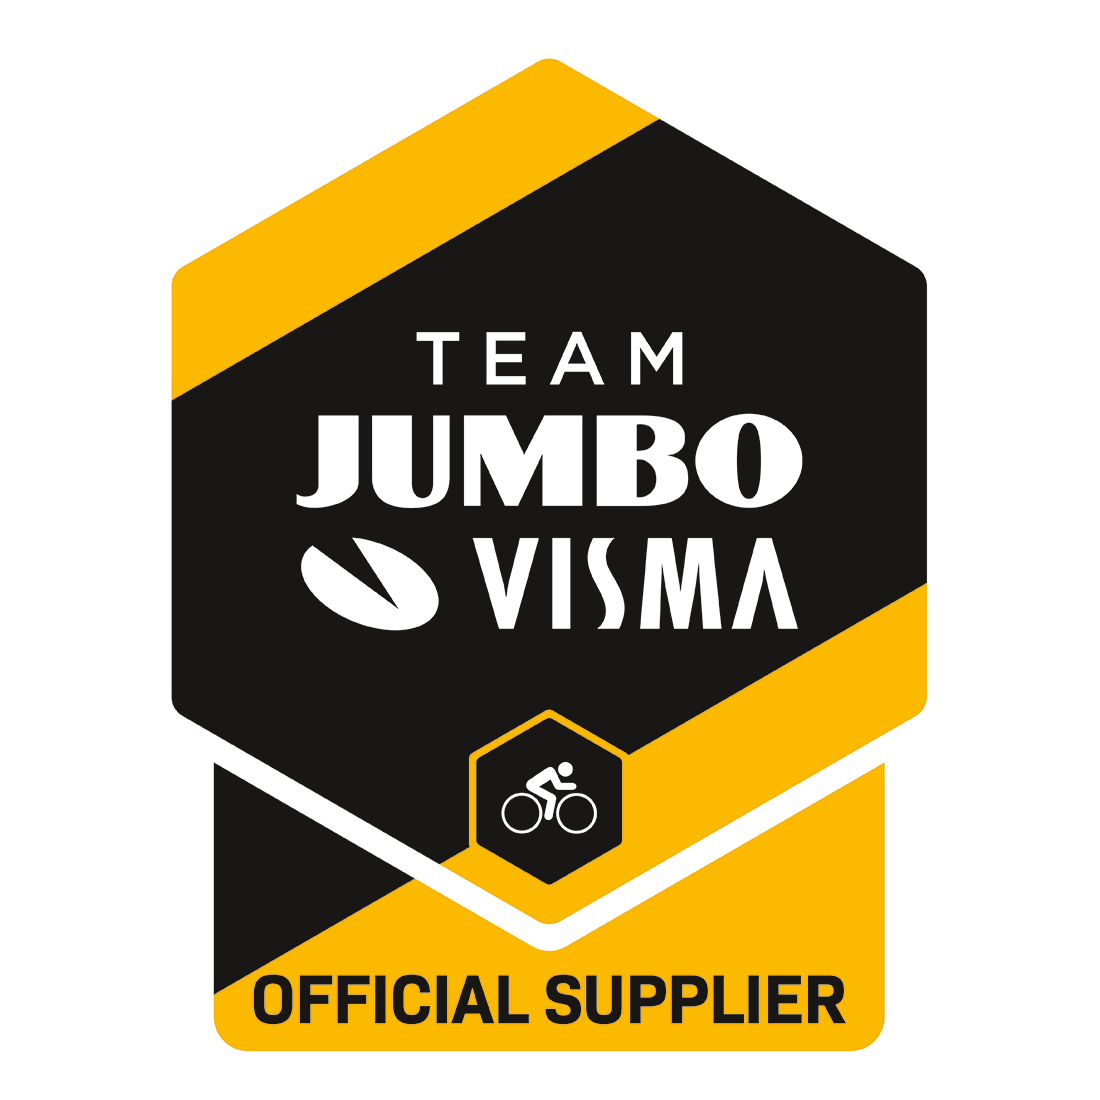 Team Jumbo Visma Official Supplier